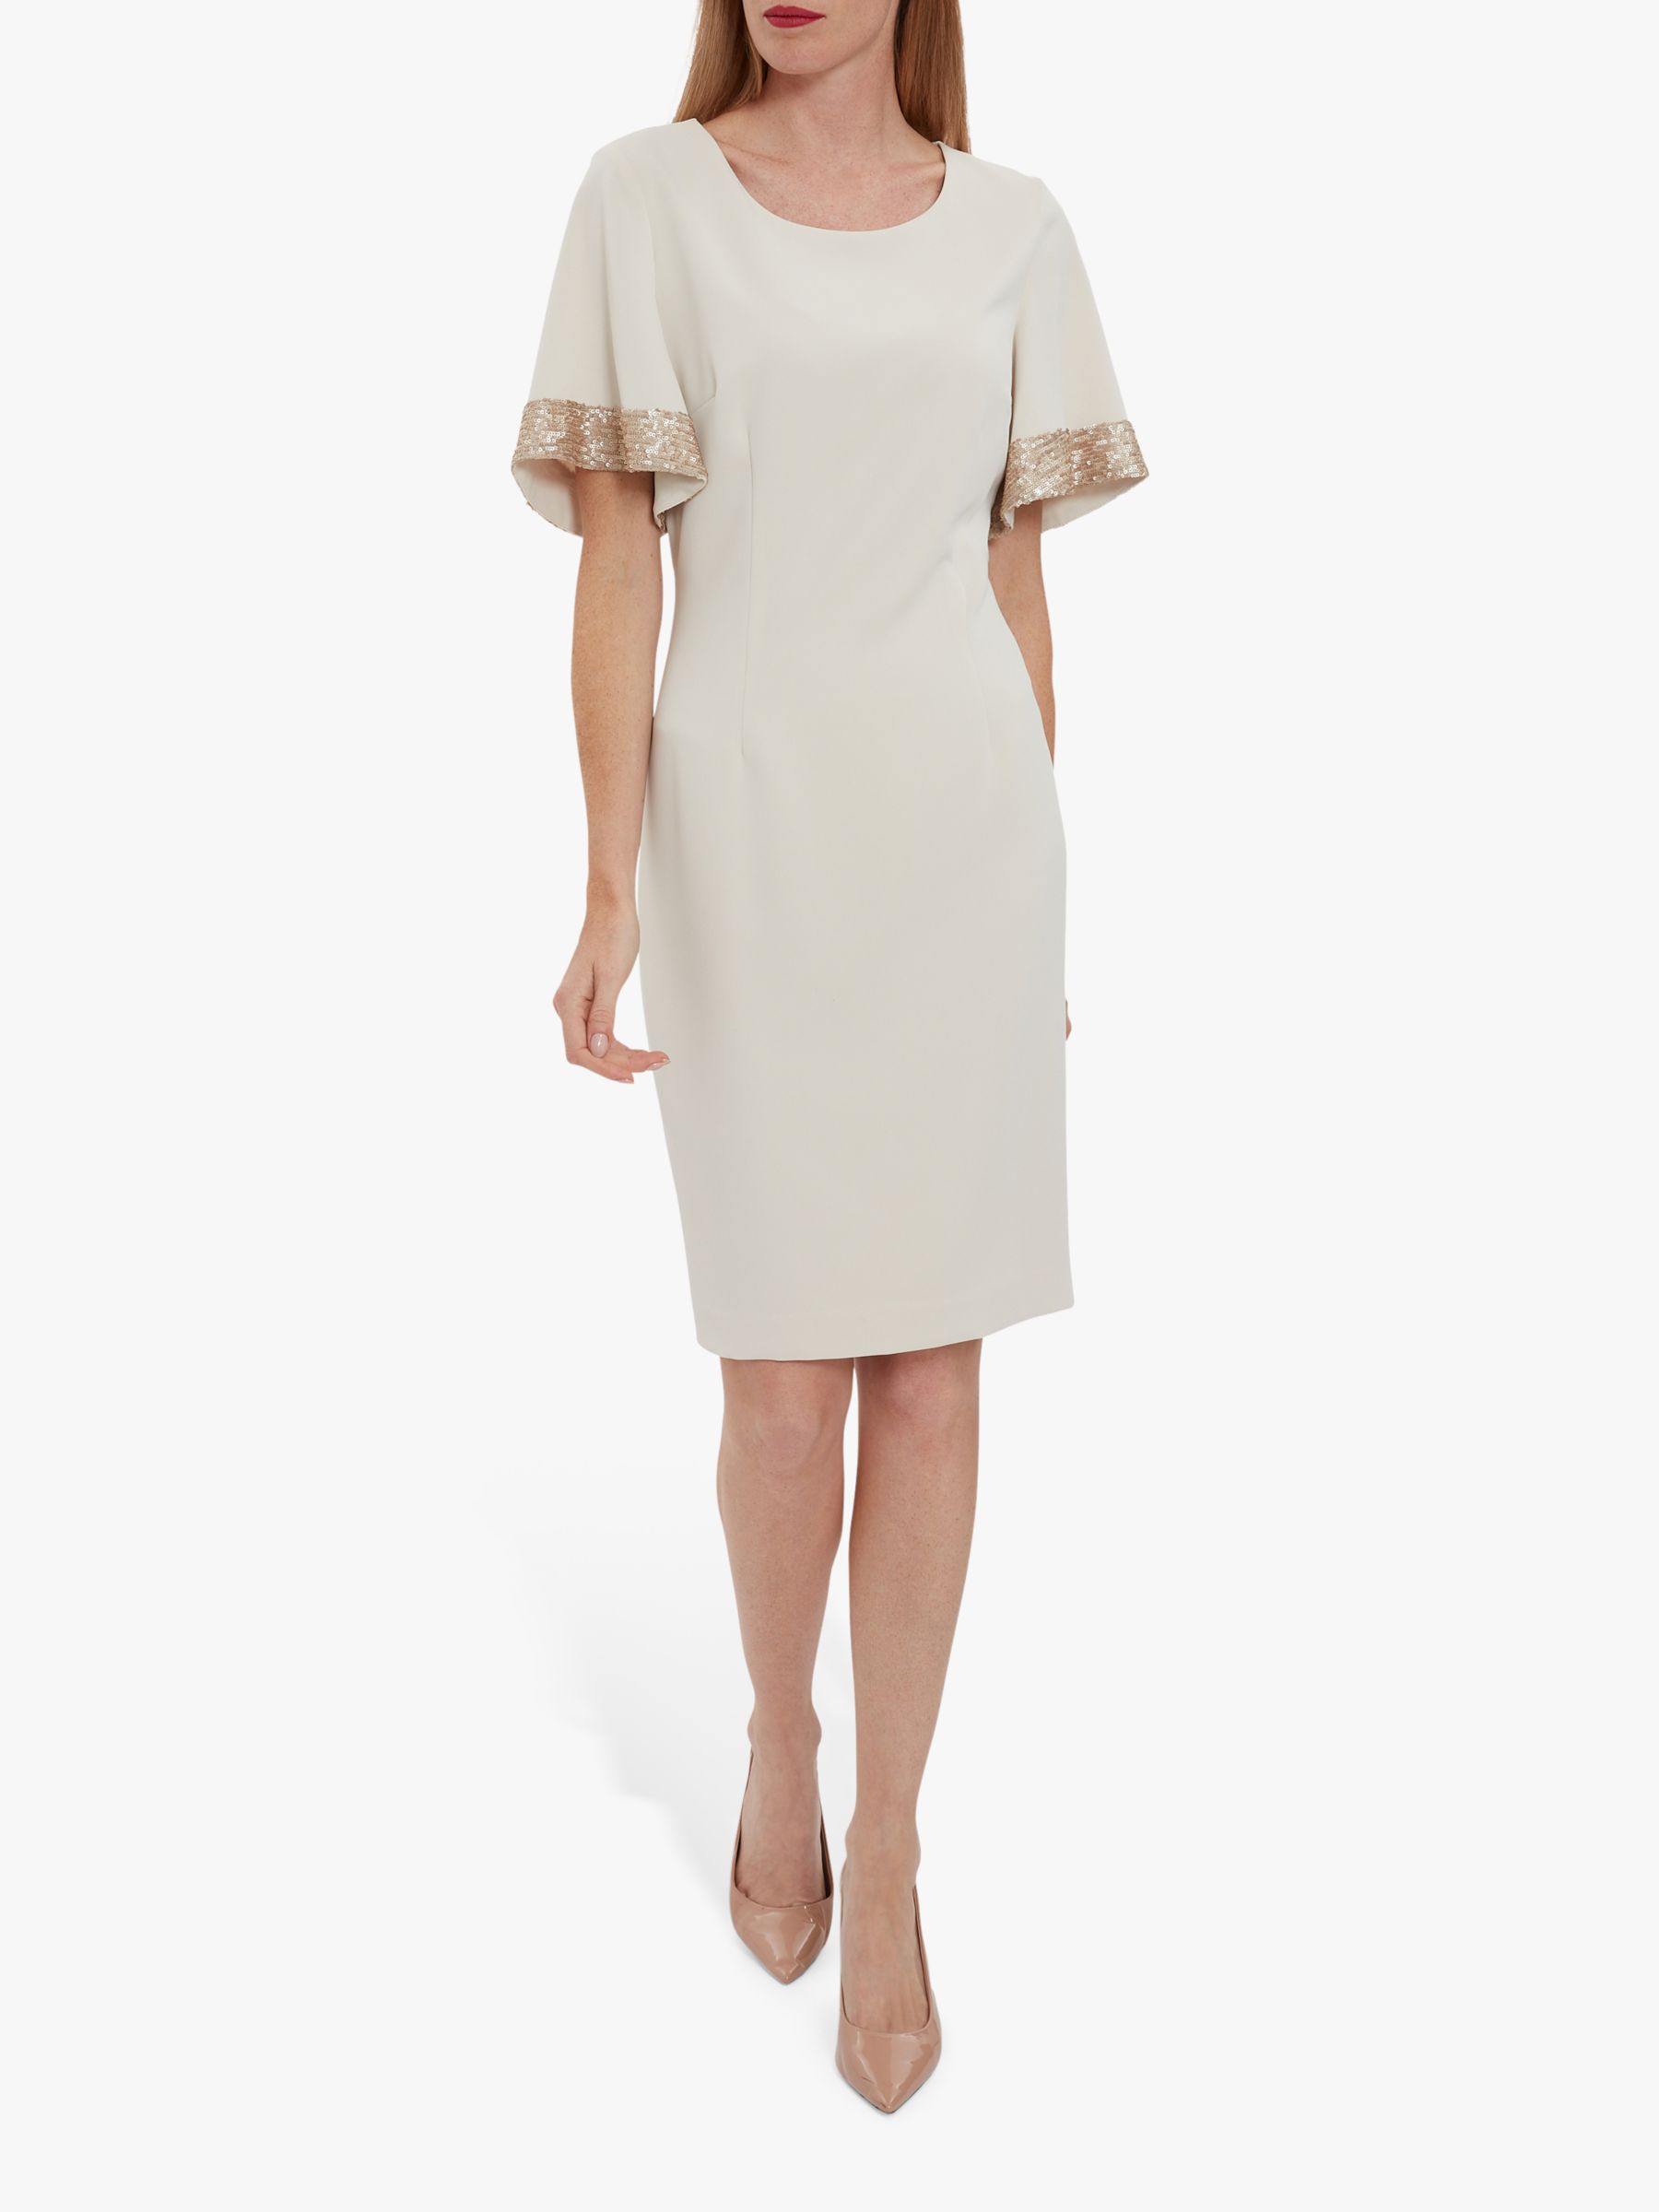 Gina Bacconi Arla Sequin Detail Dress, Buttercream at John Lewis & Partners